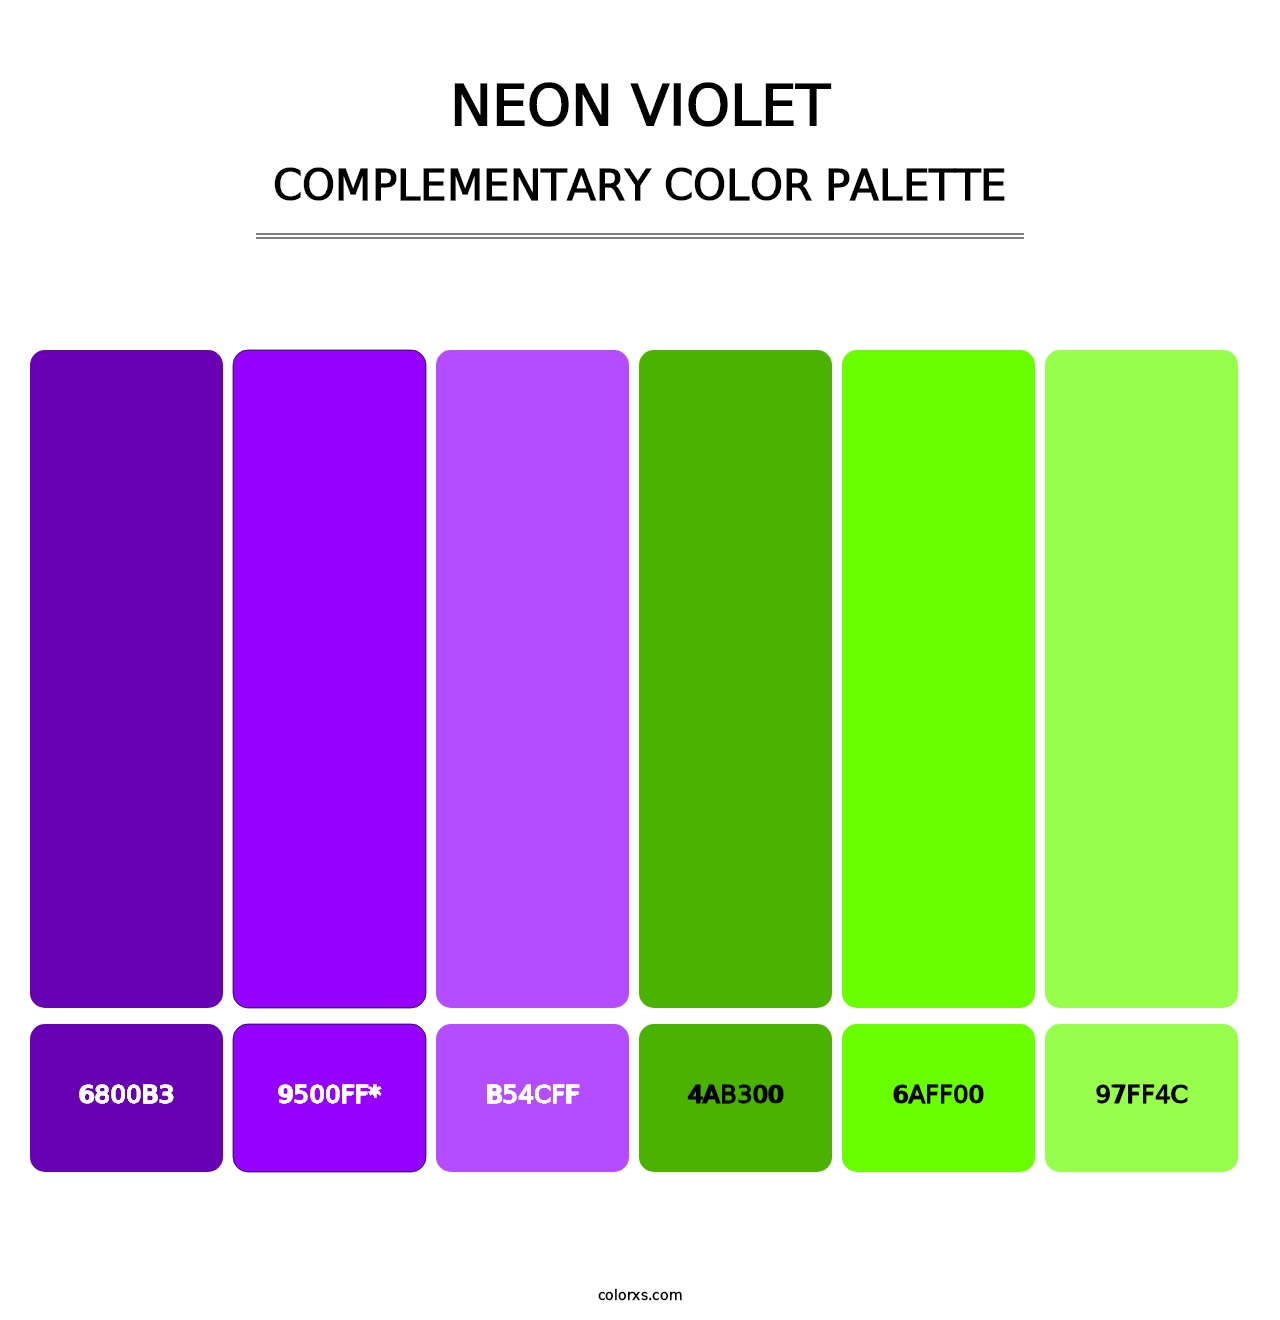 Neon Violet - Complementary Color Palette